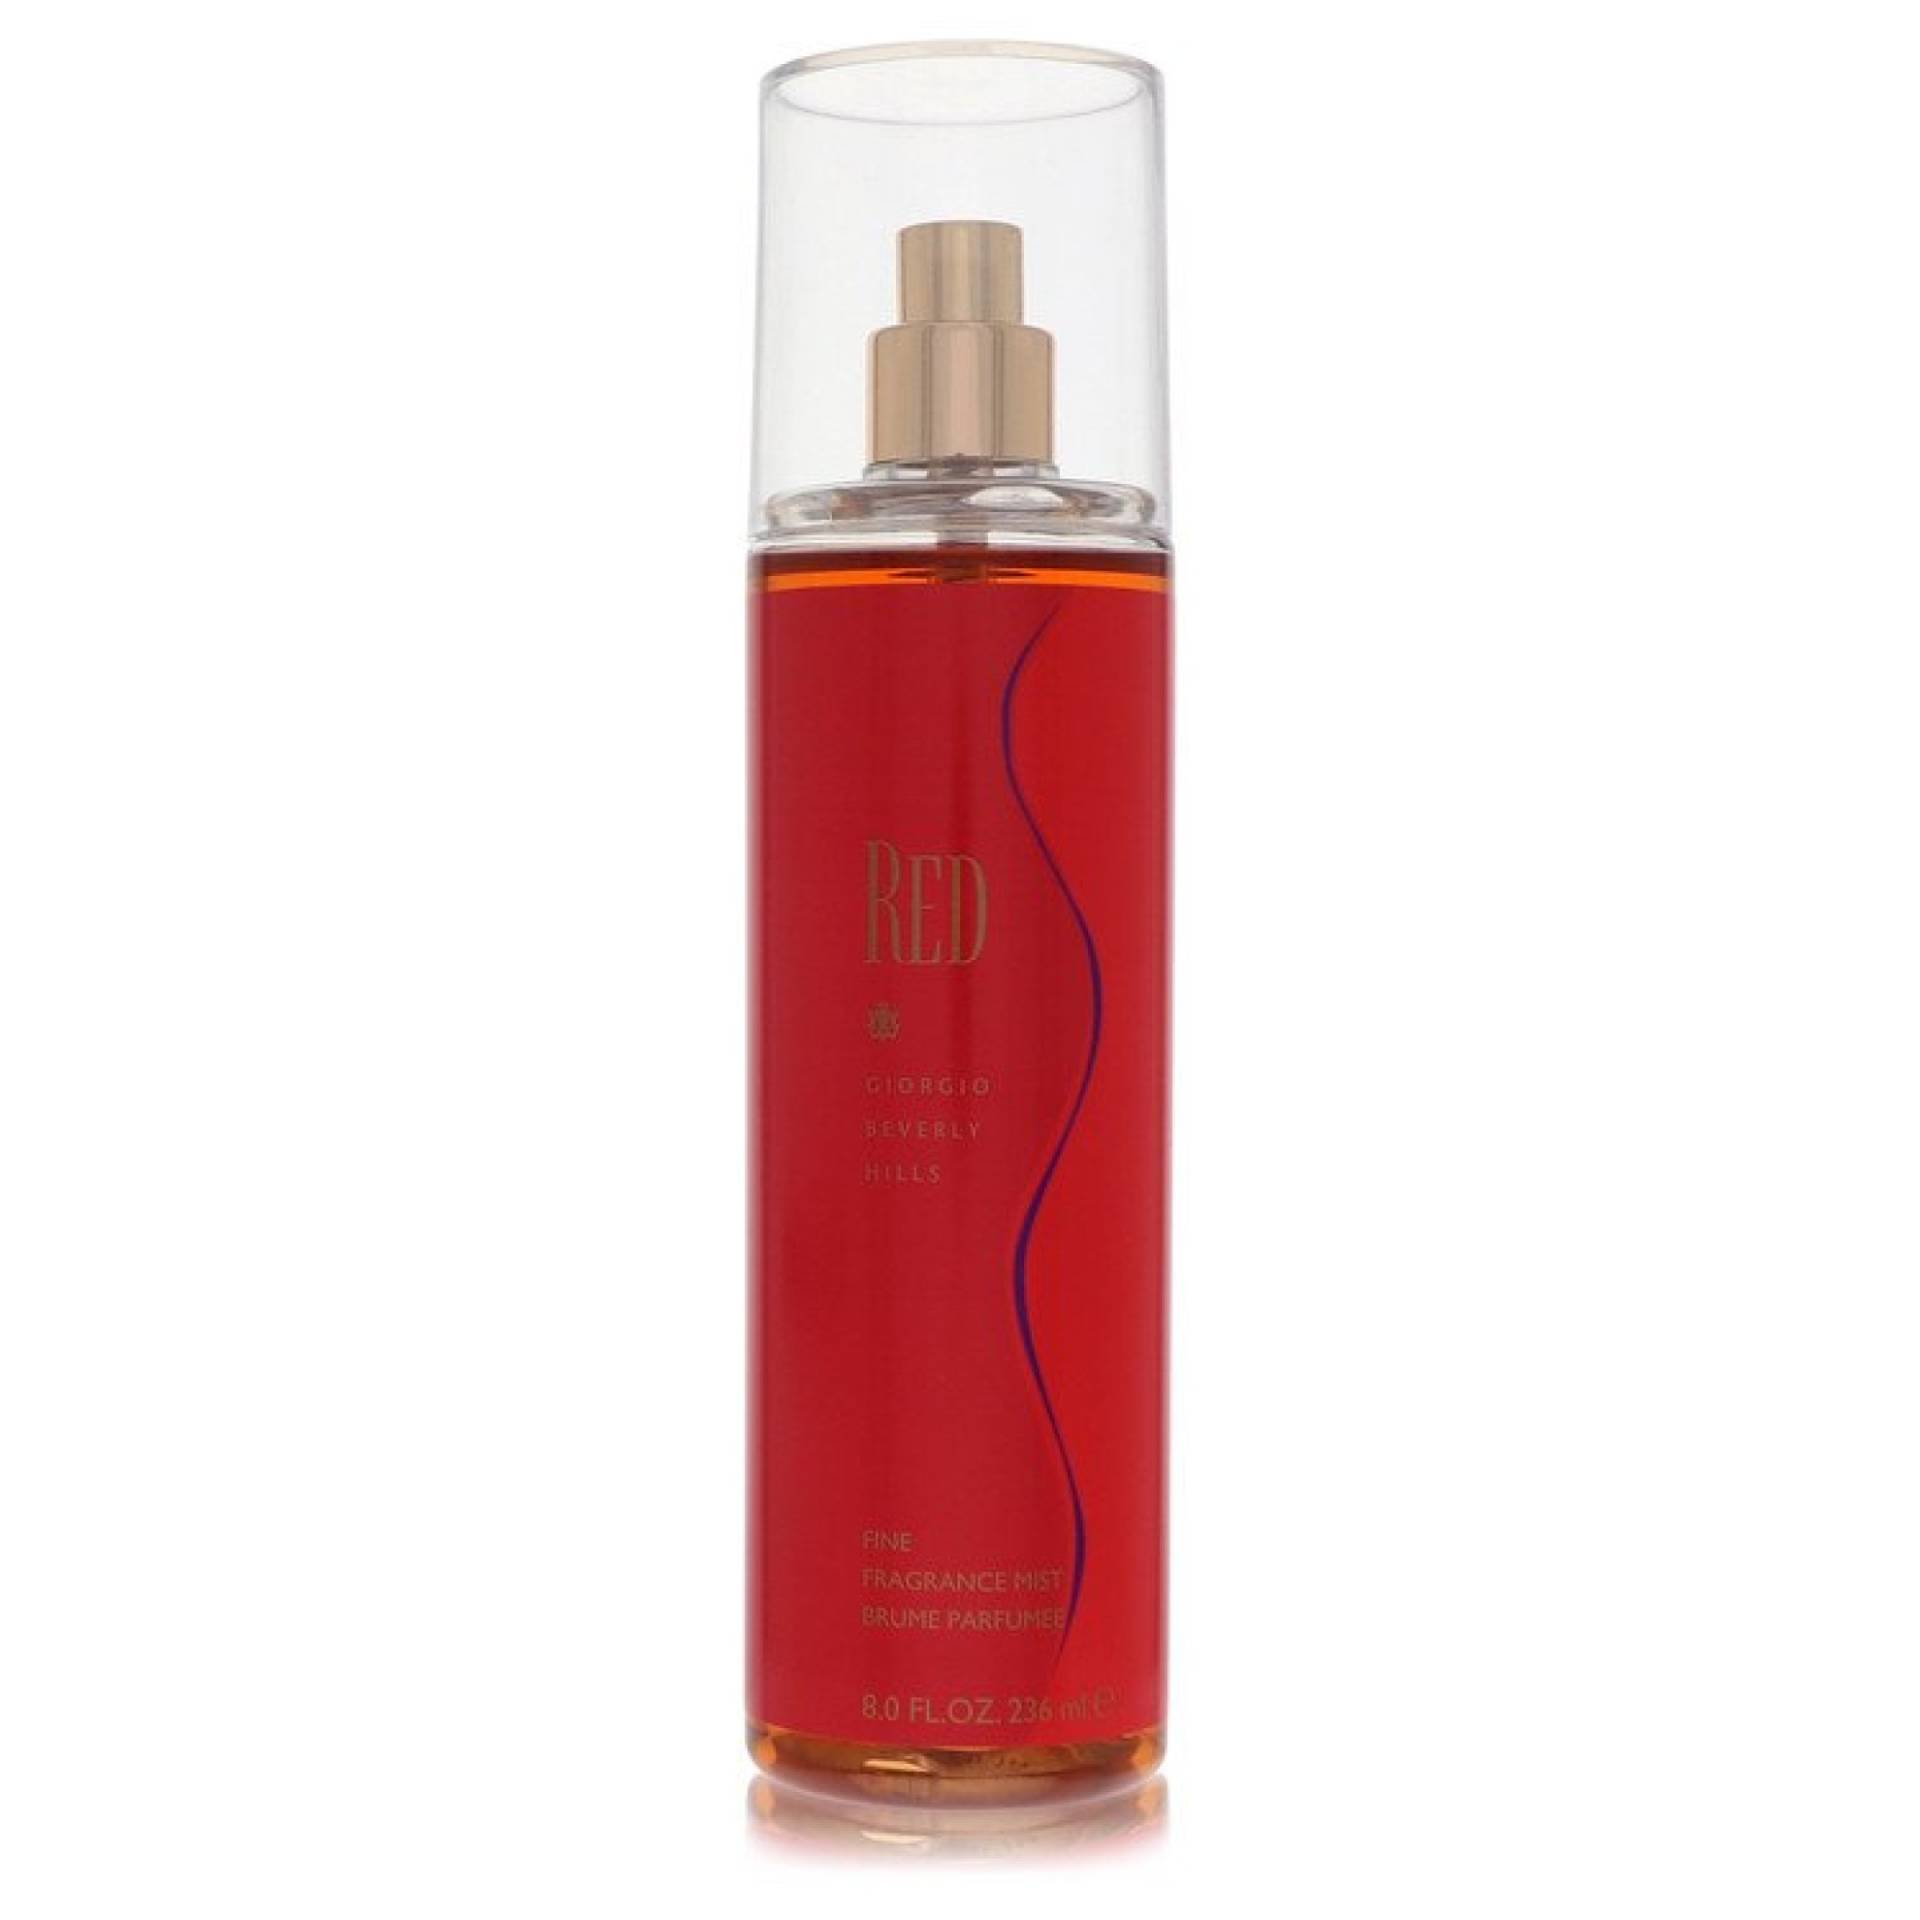 Giorgio Beverly Hills RED Fragrance Mist 240 ml von Giorgio Beverly Hills